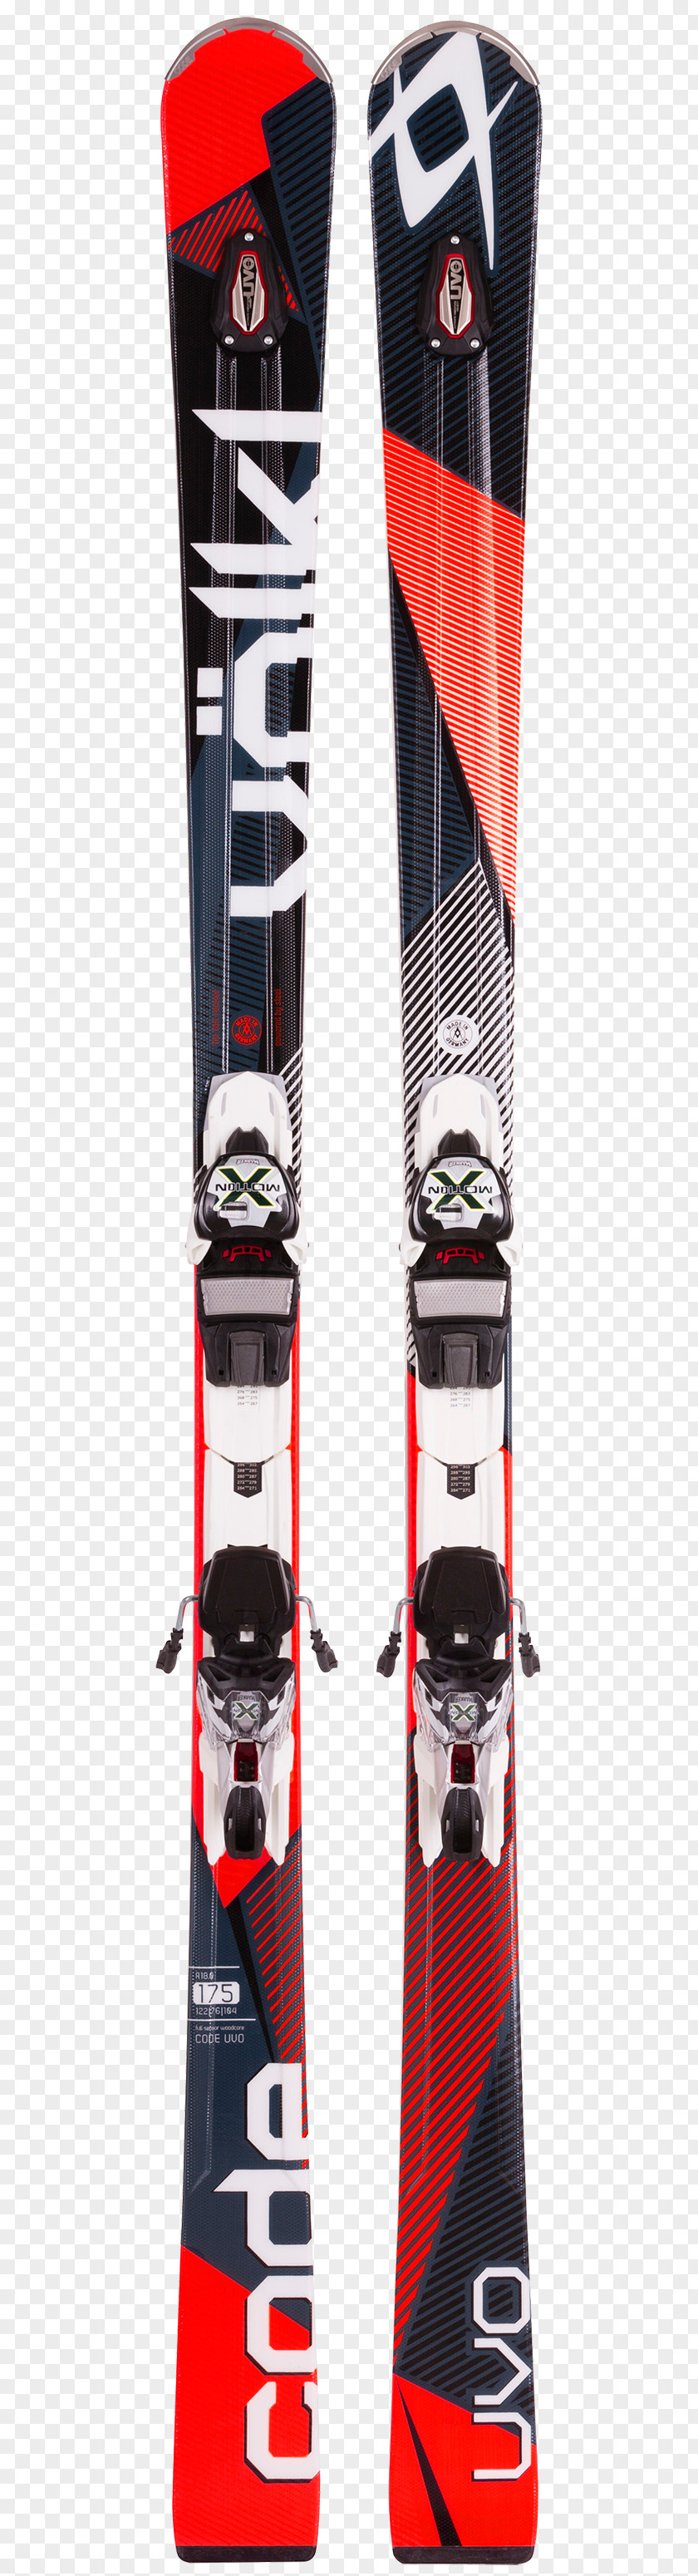 Völkl RTM 81 (2017) Alpine Skiing Ski Bindings PNG